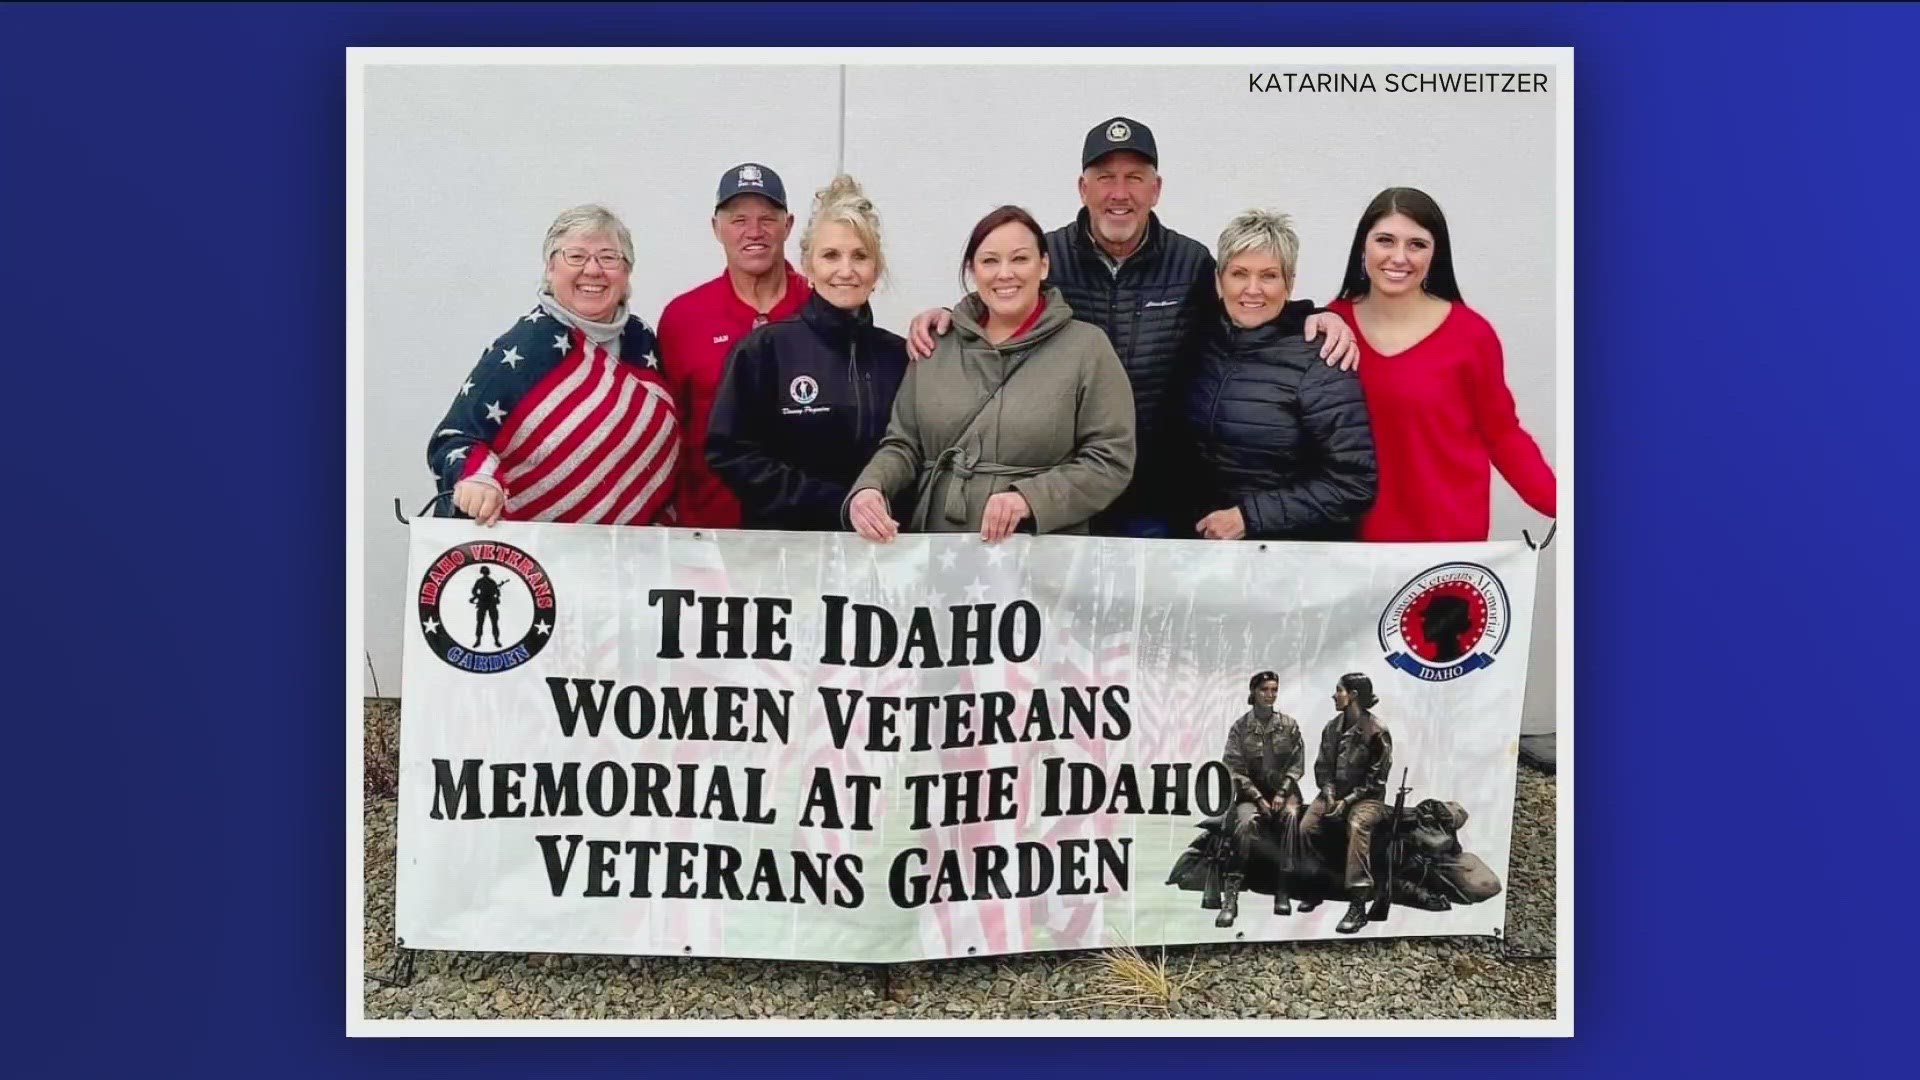 The Idaho Women Veterans Memorial Car Show Fundraiser in Meridian on Saturday raised $3,000 to help build a statue at the Idaho Veteran's Garden.